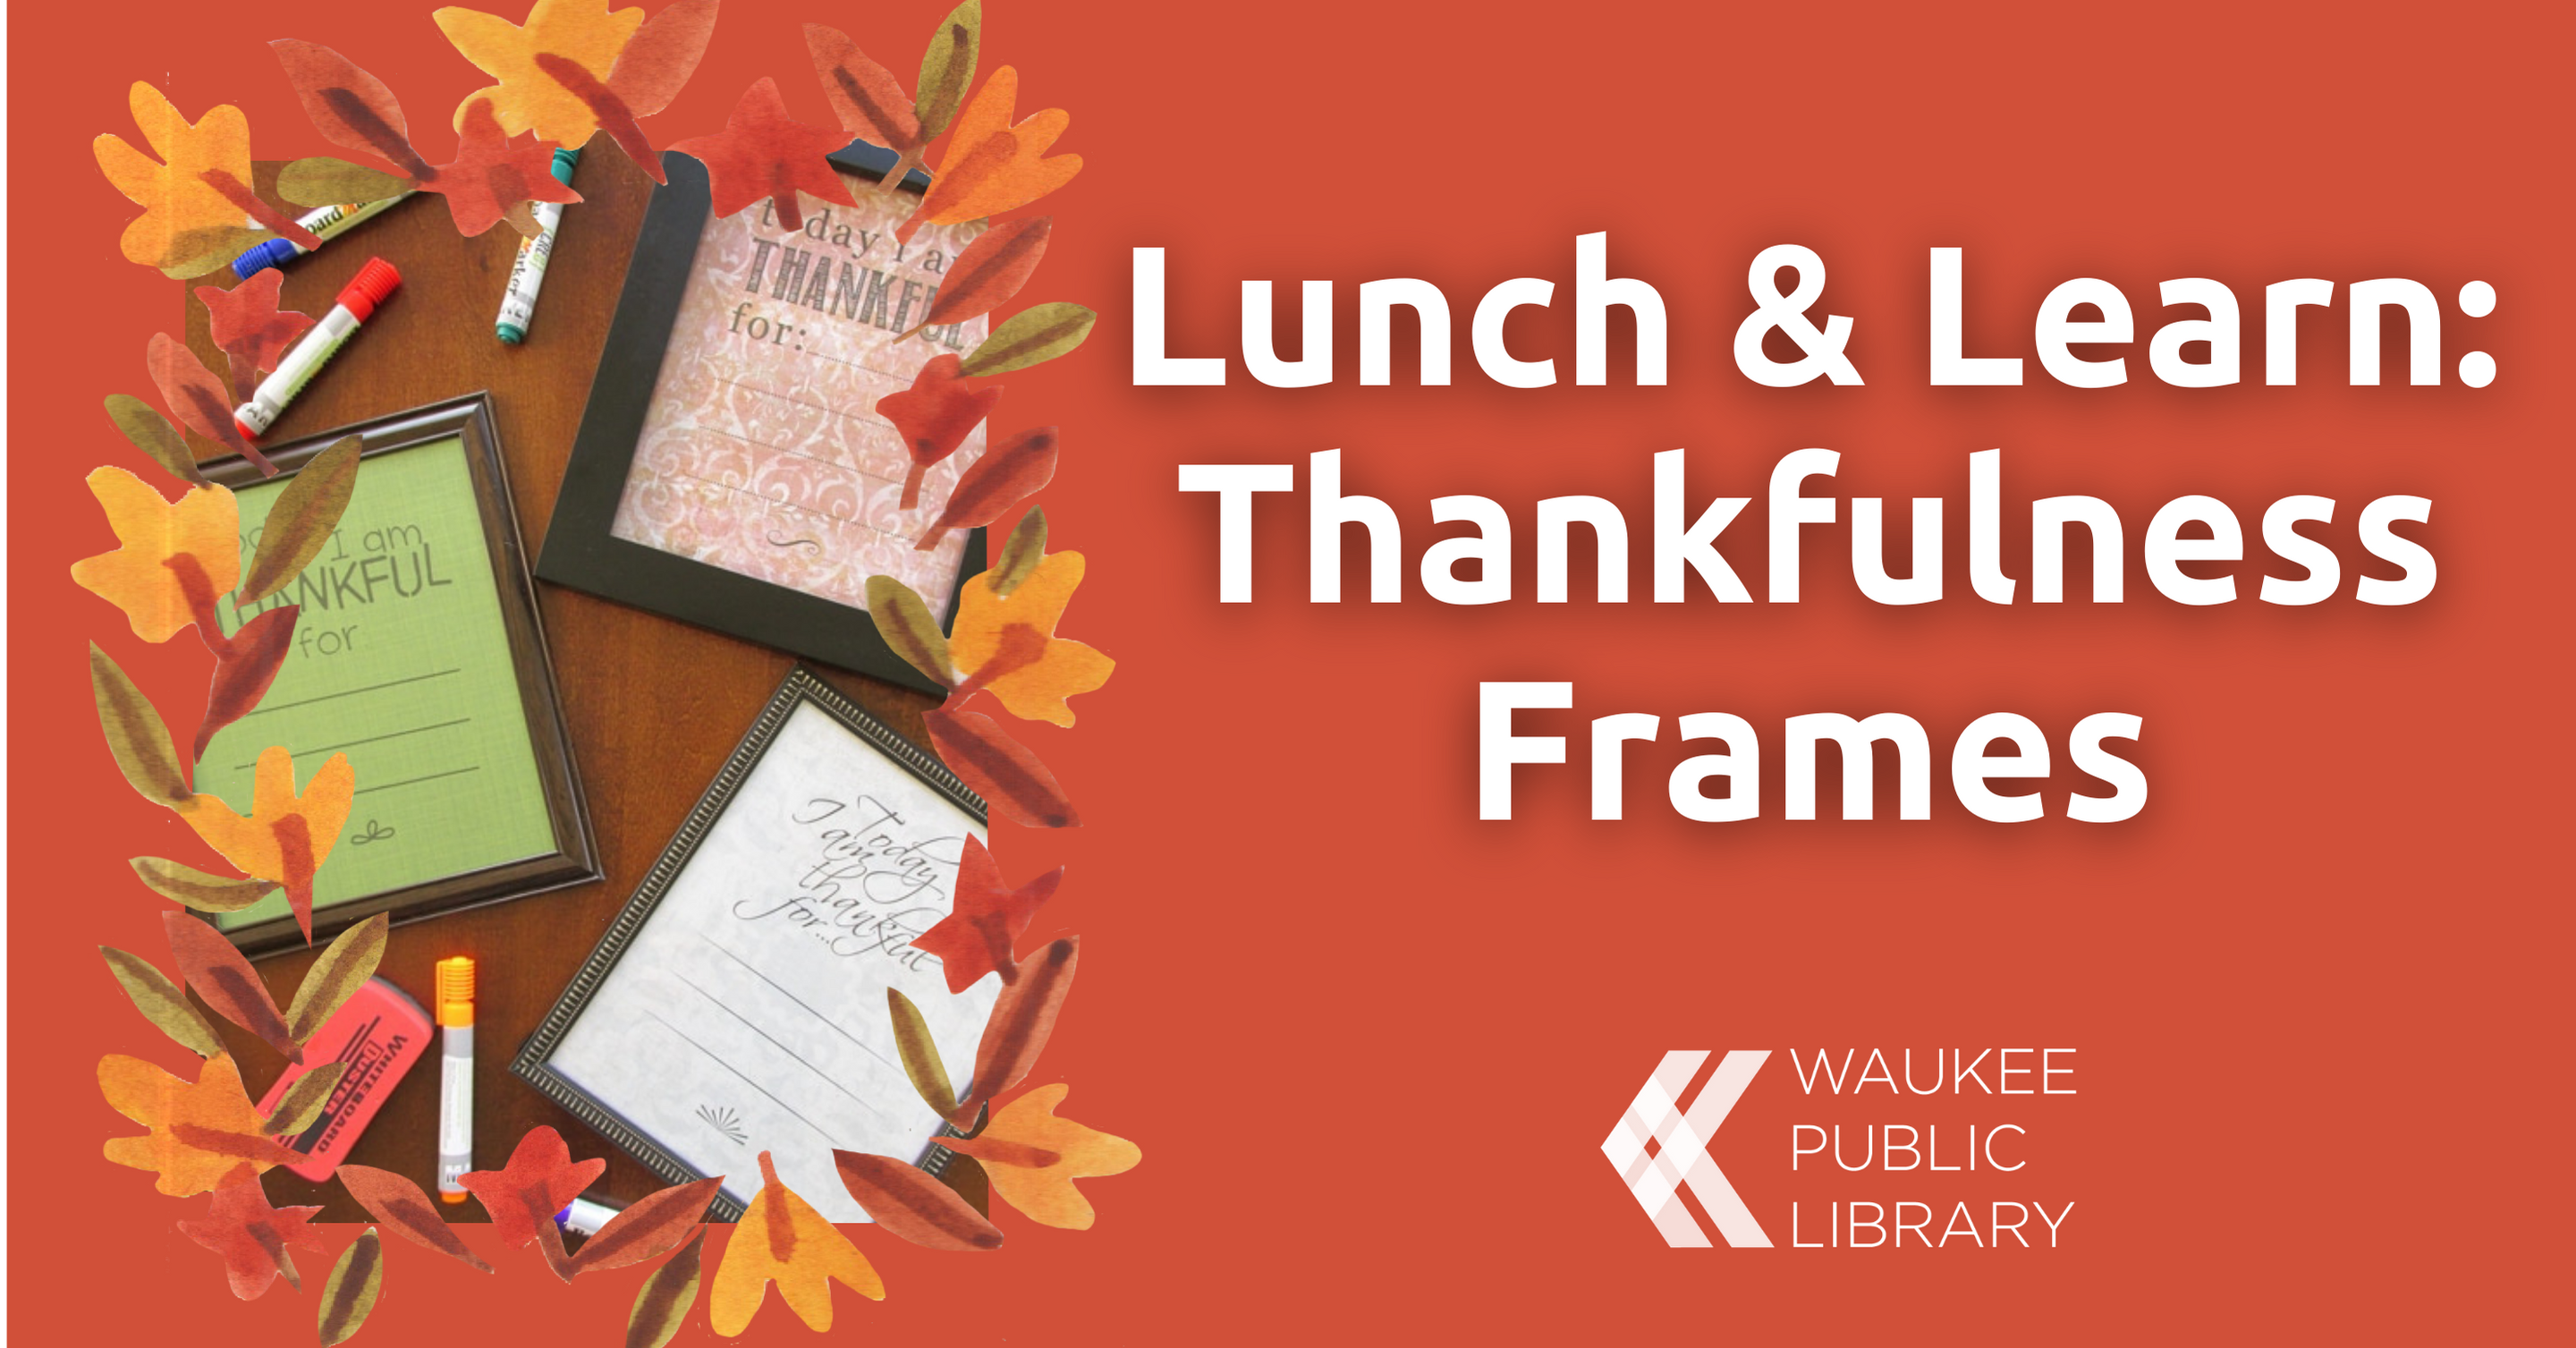 Lunch & Learn: Thankfulness Frames